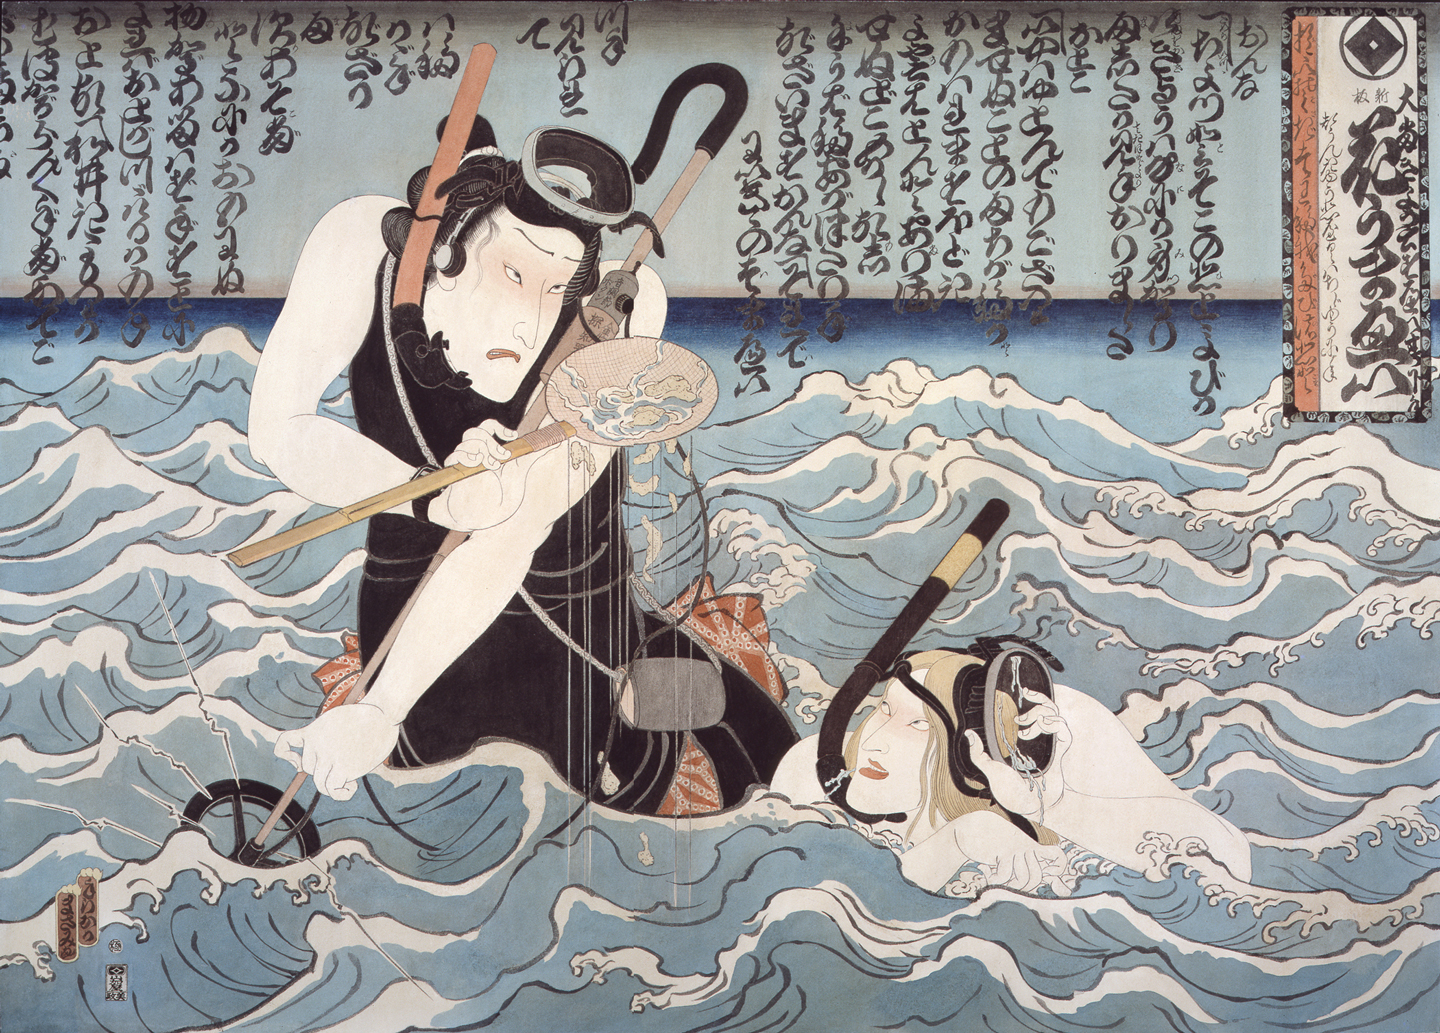 artwork of man and woman snorkeling in ocean